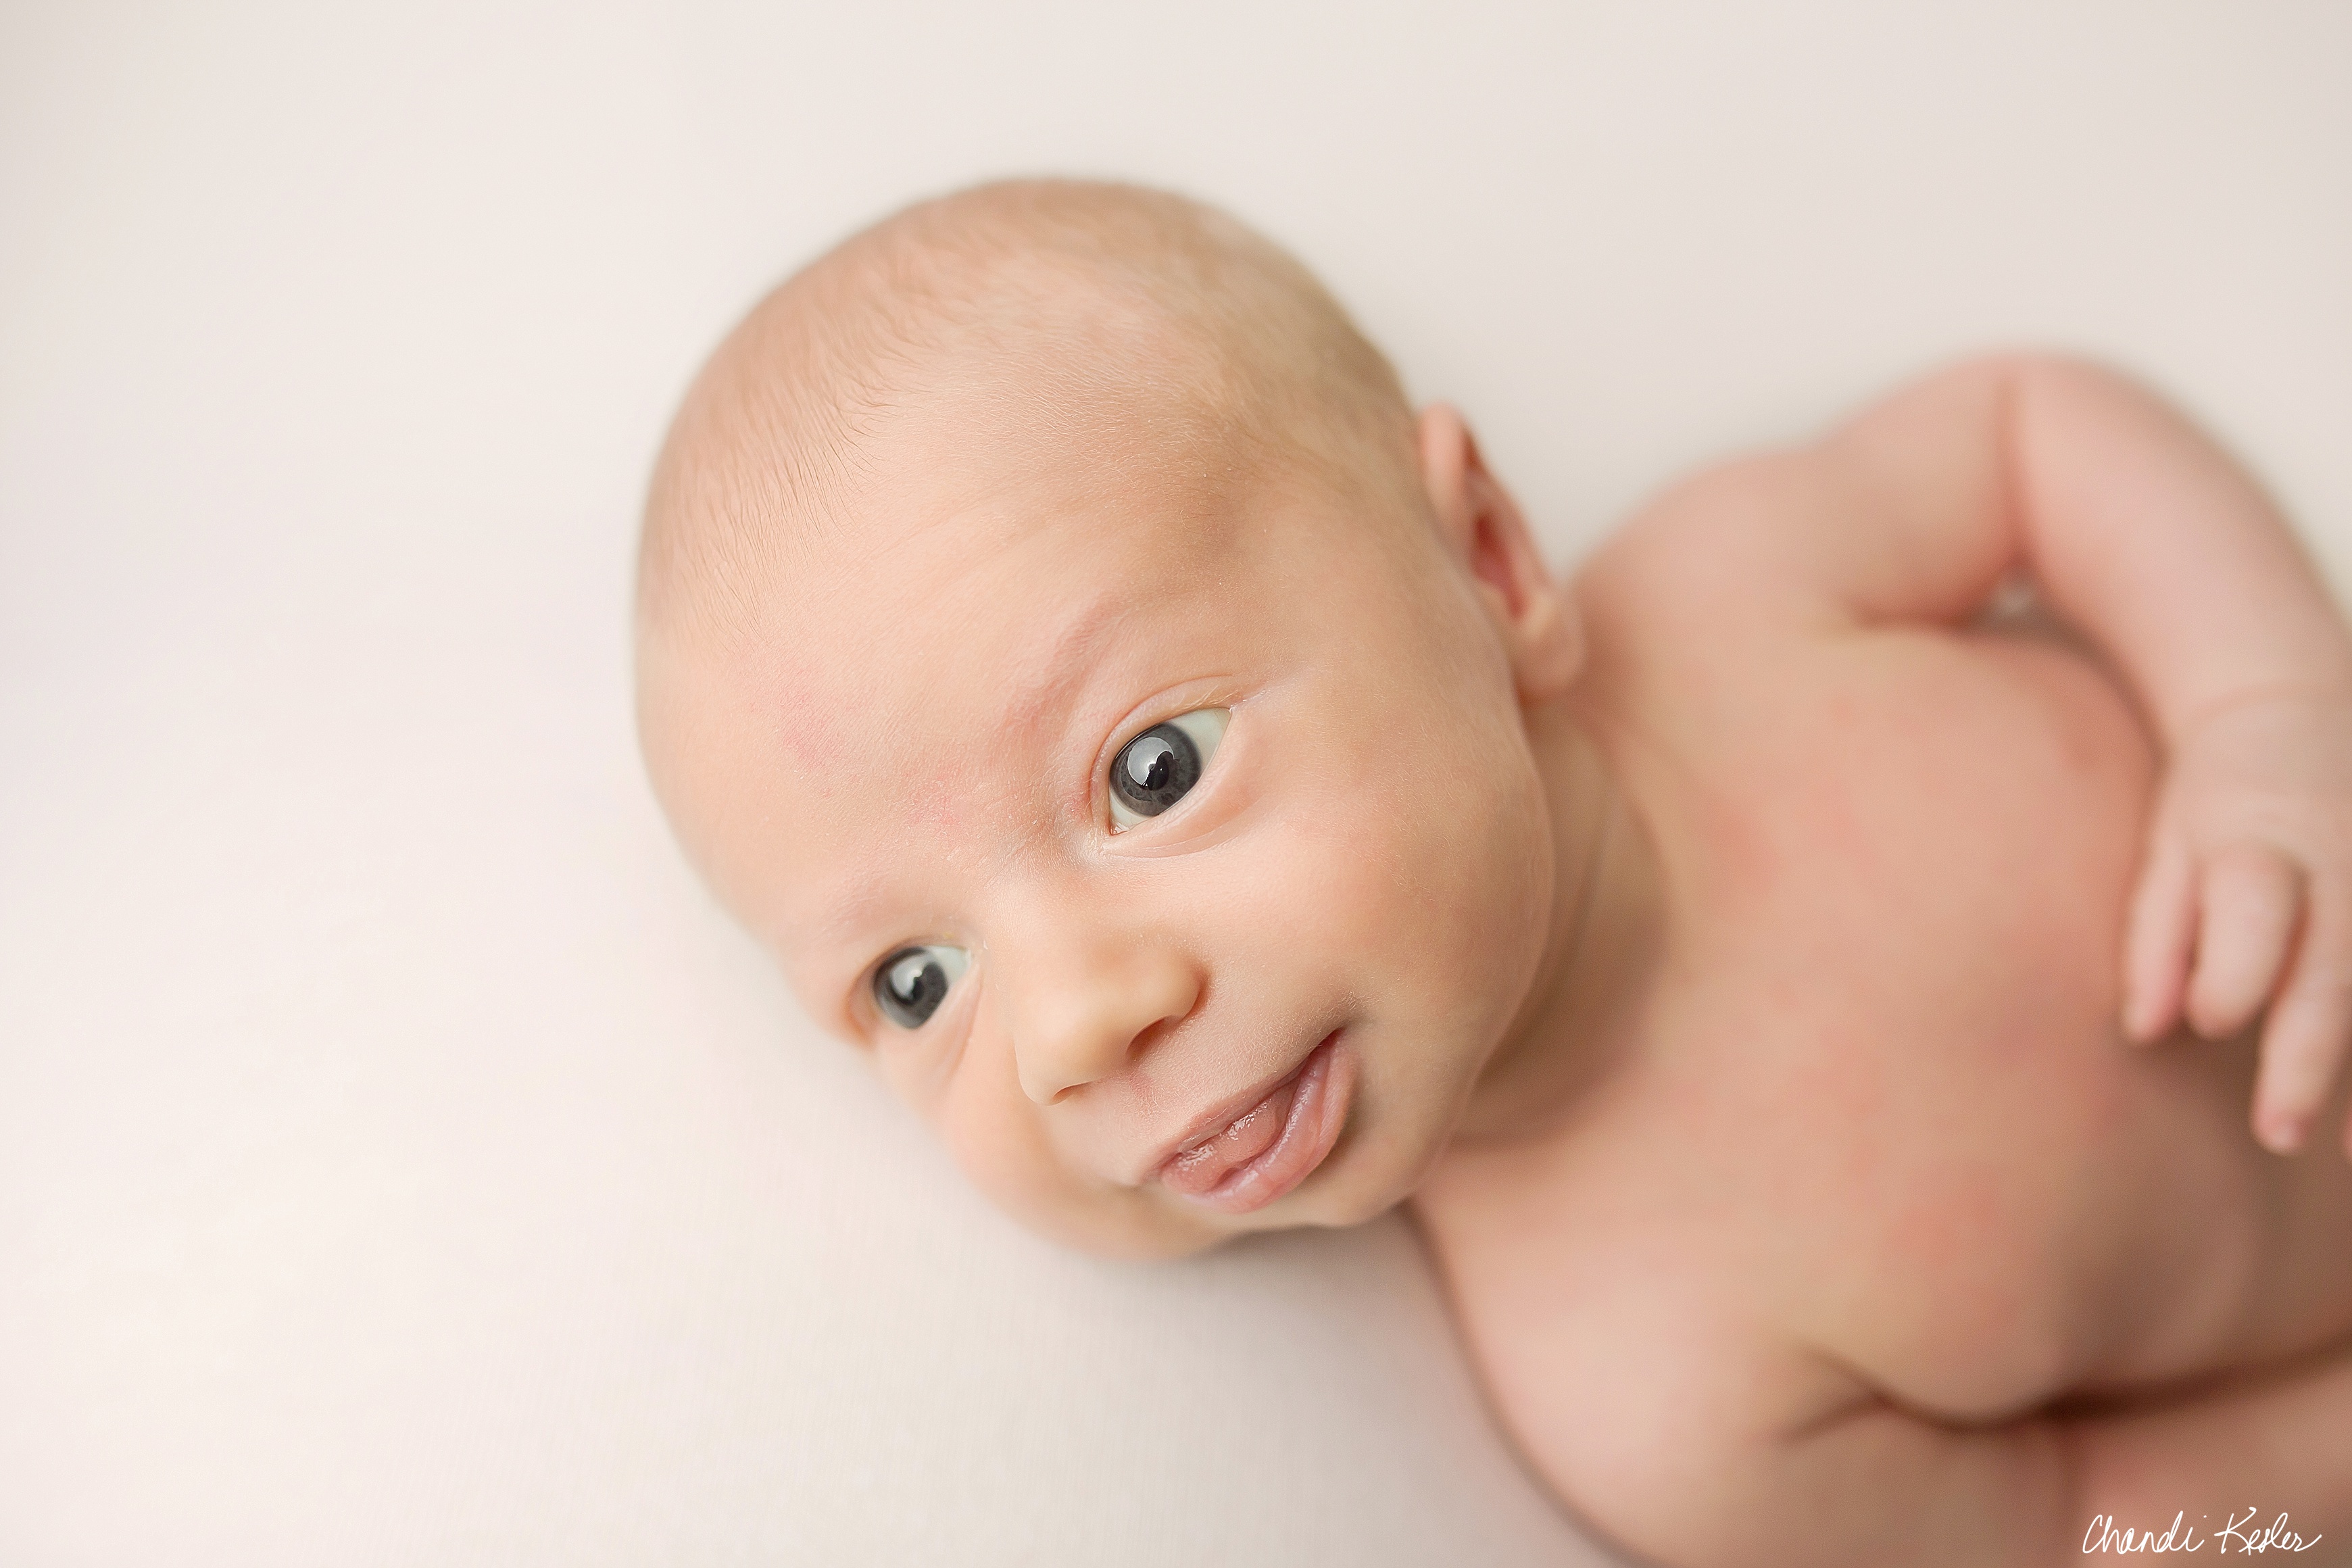 Heyworth IL Newborn Photographer | Chandi Kesler Photography